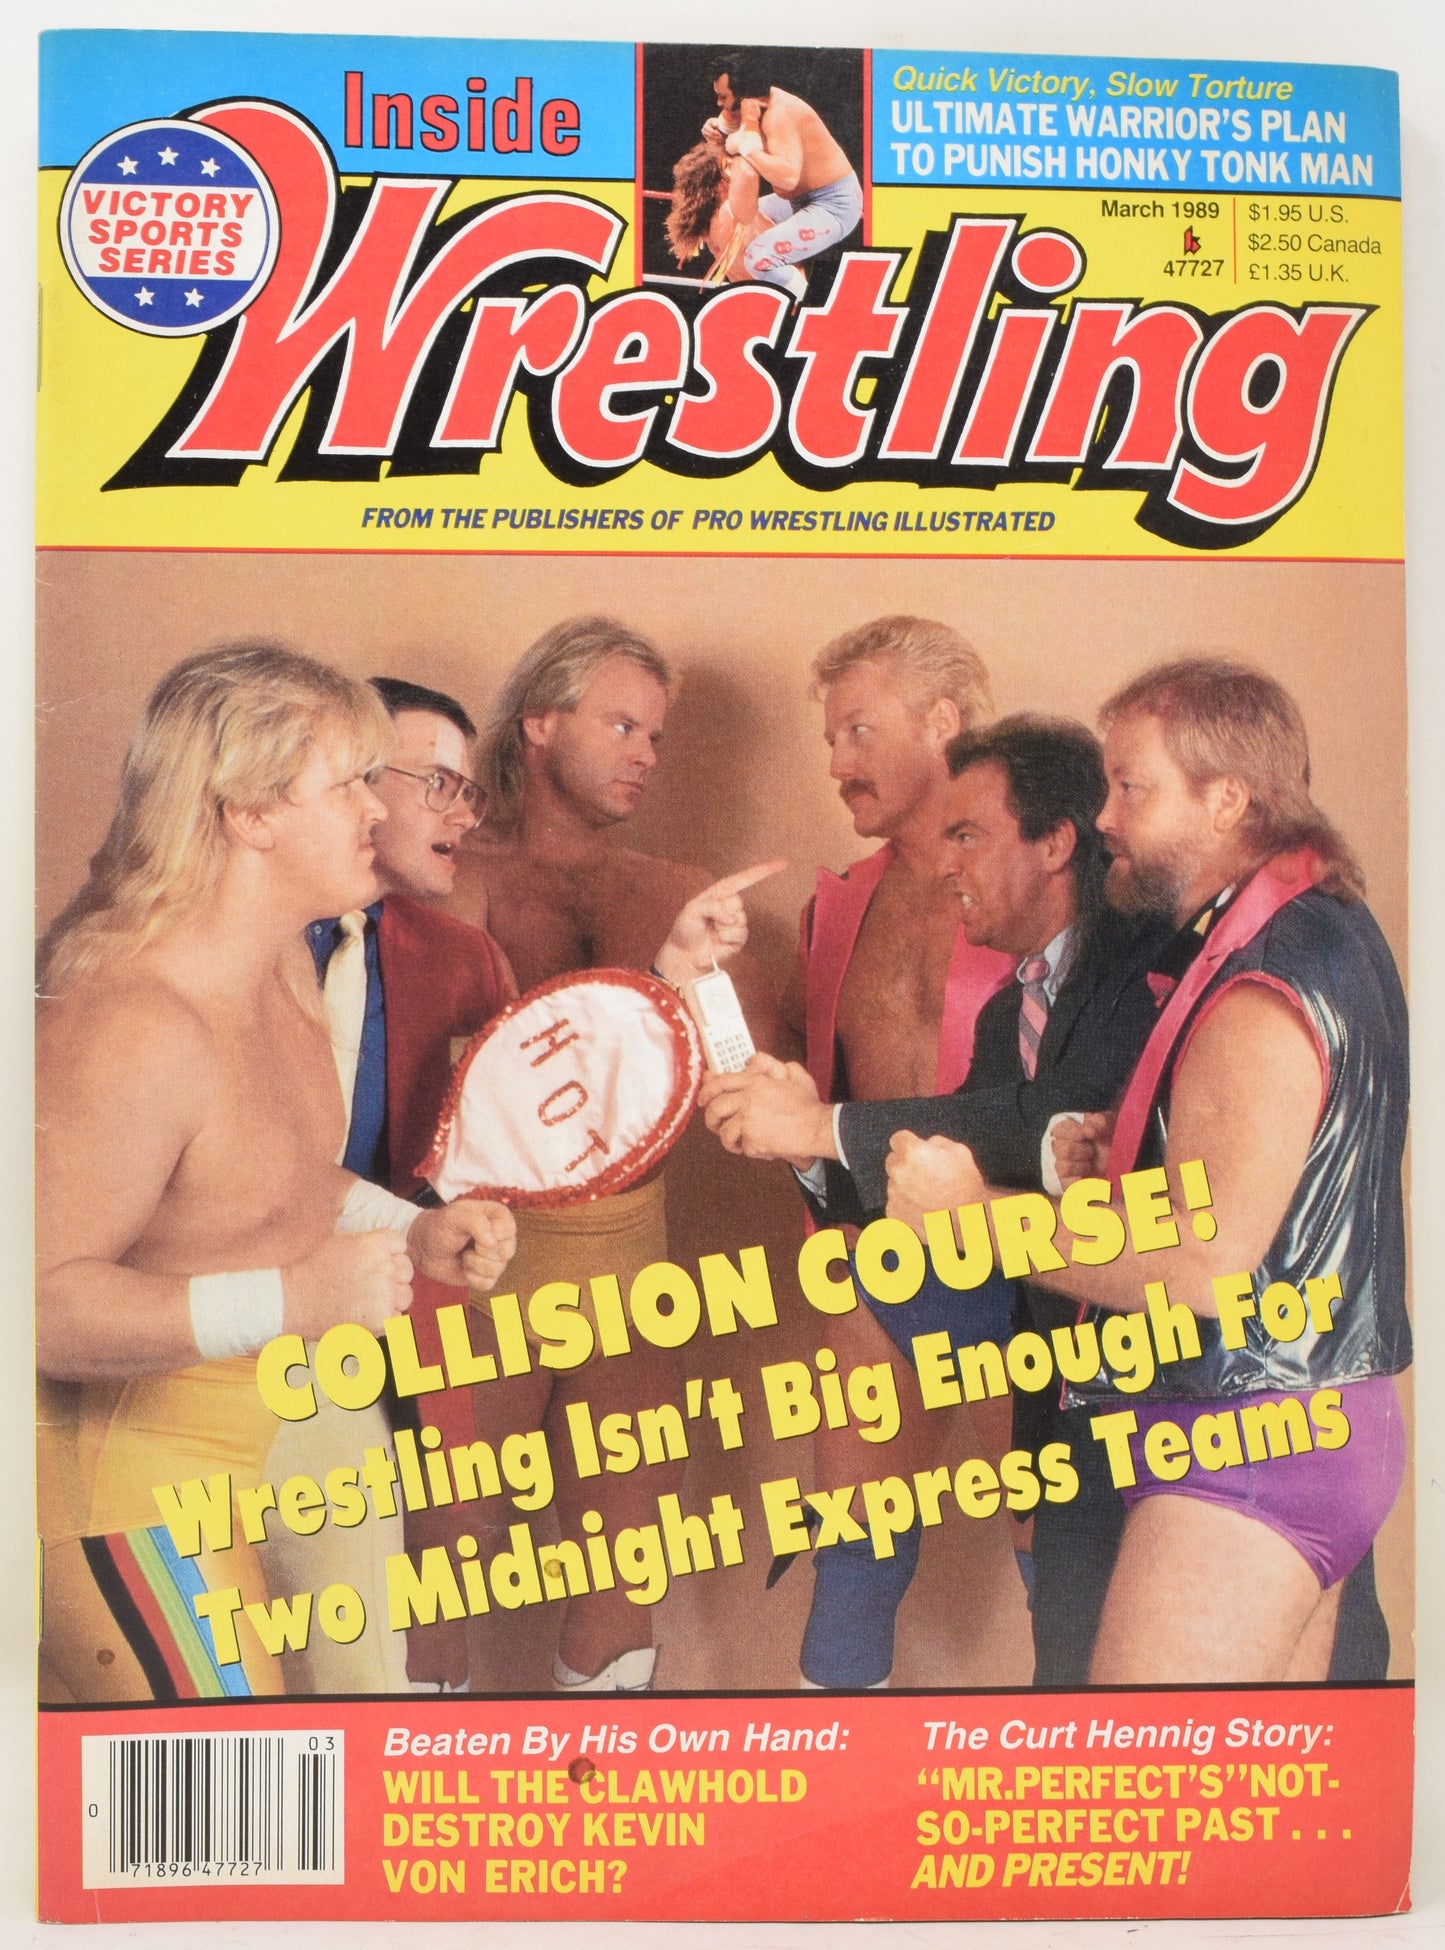 Inside Wrestling Magazine March 1989 FN Ultimate Warrior WWF WWE